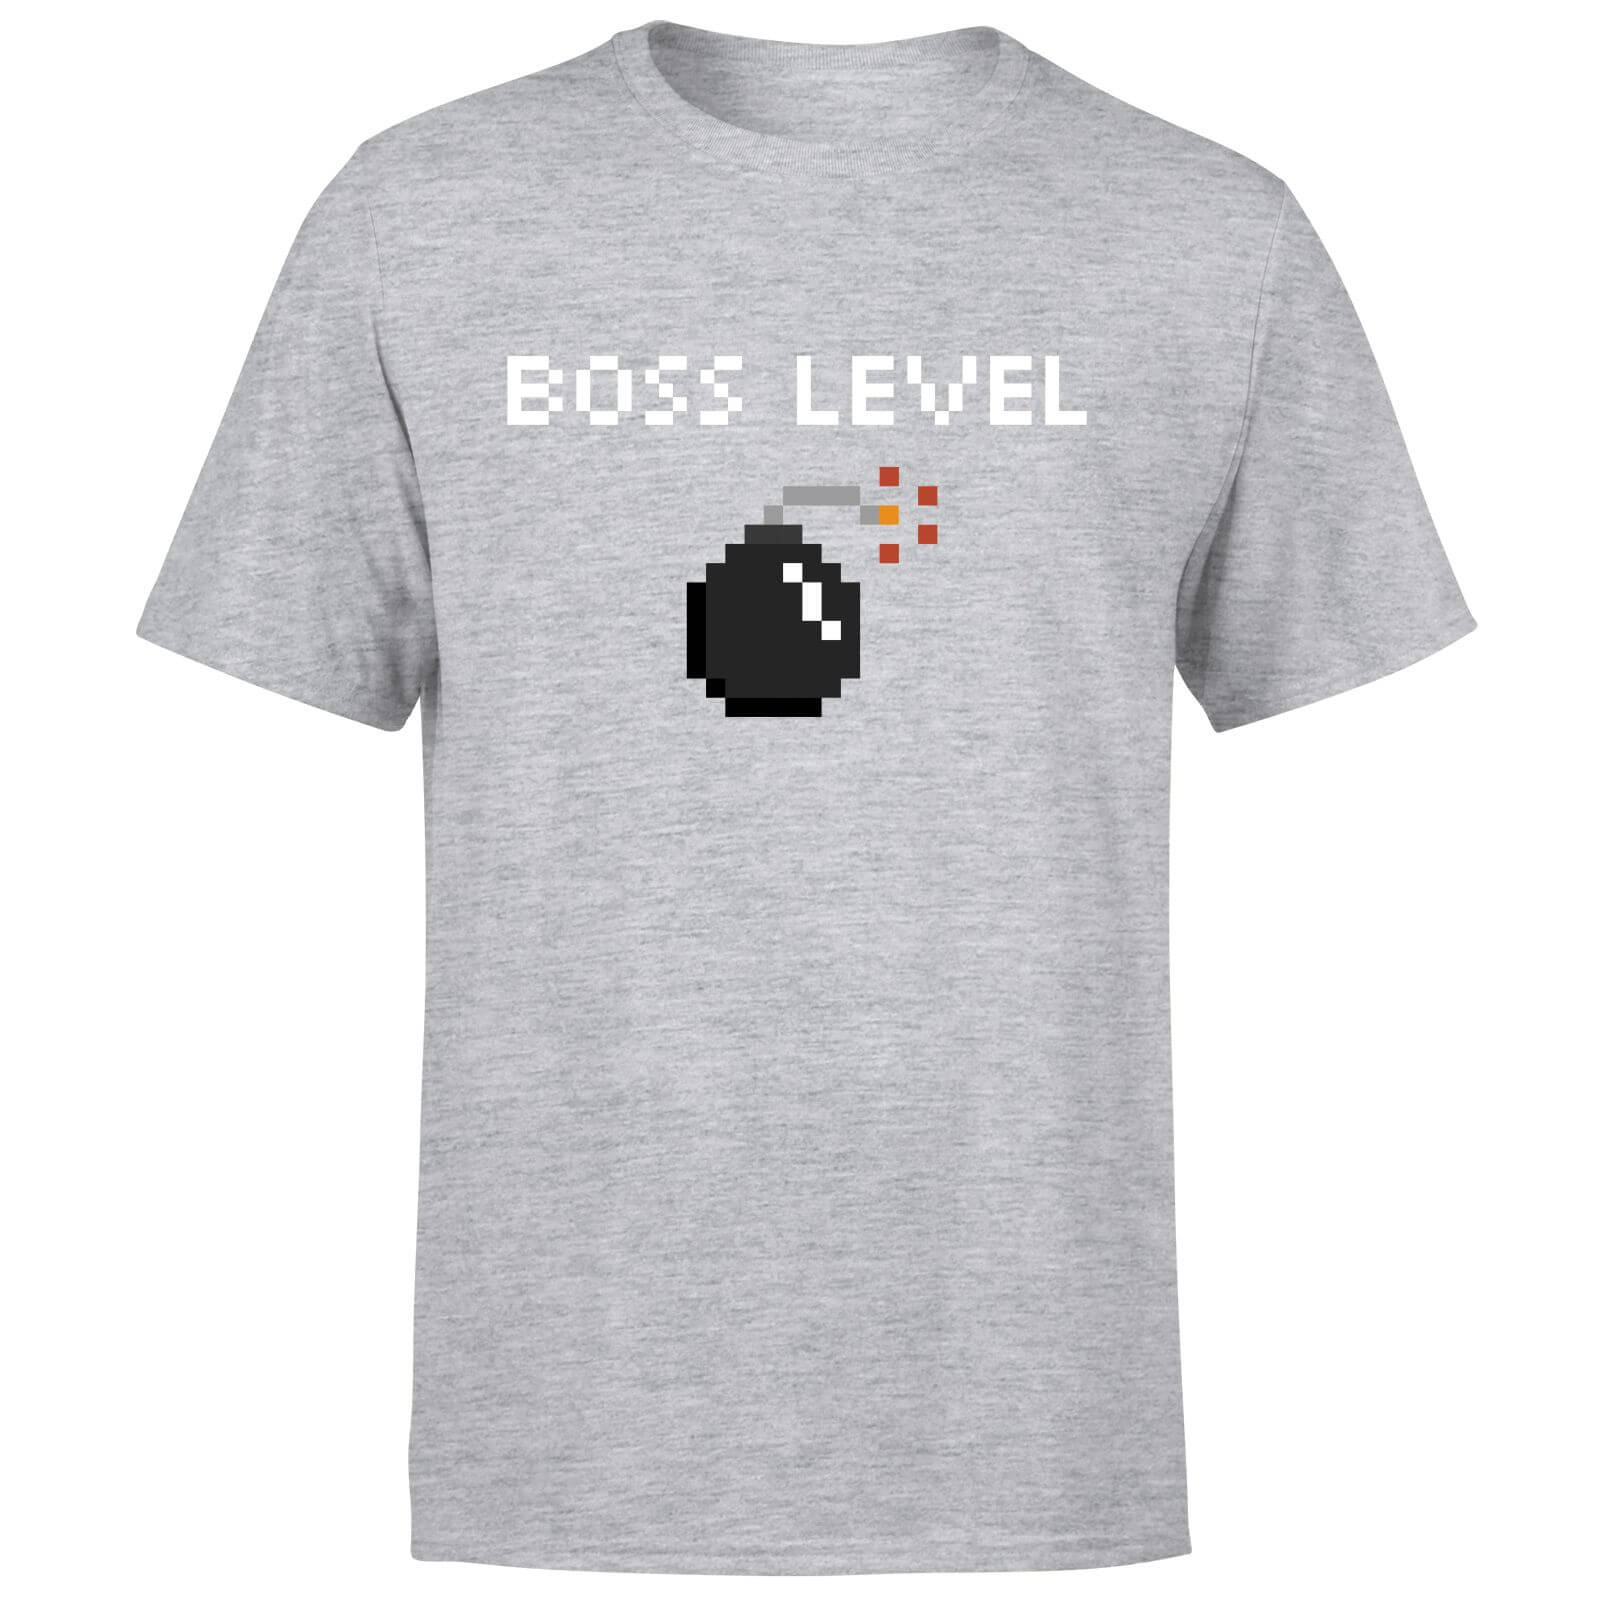 Boss Level Gaming T-Shirt - Grey - S - Grey